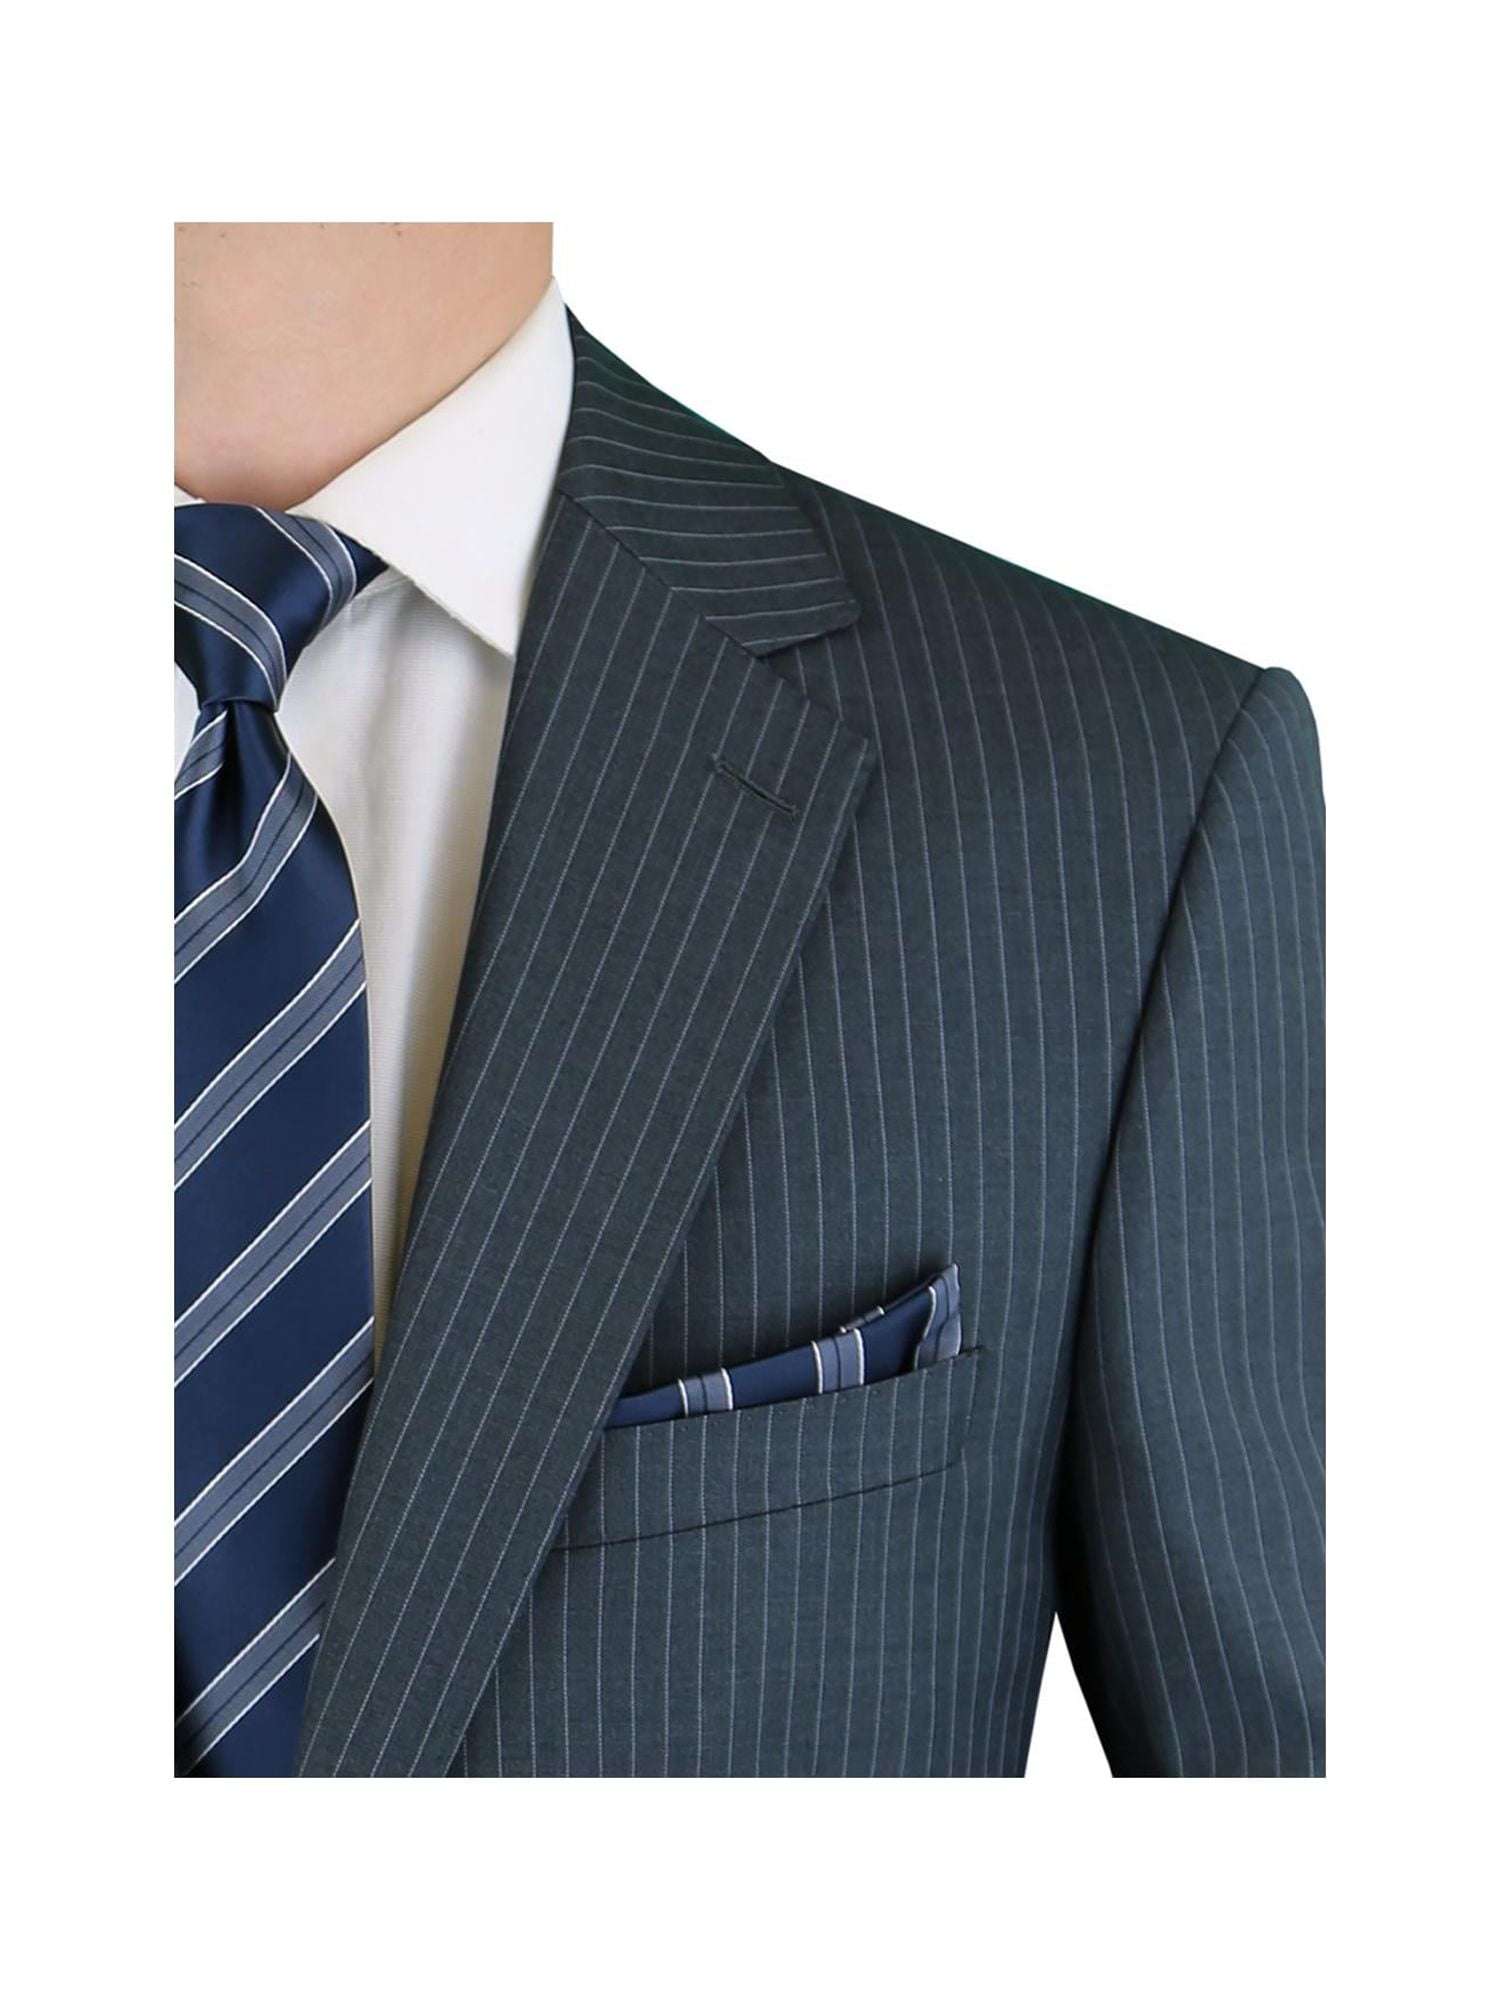 LN LUCIANO NATAZZI Italian Men's Suit 180'S Cashmere Wool Ticket